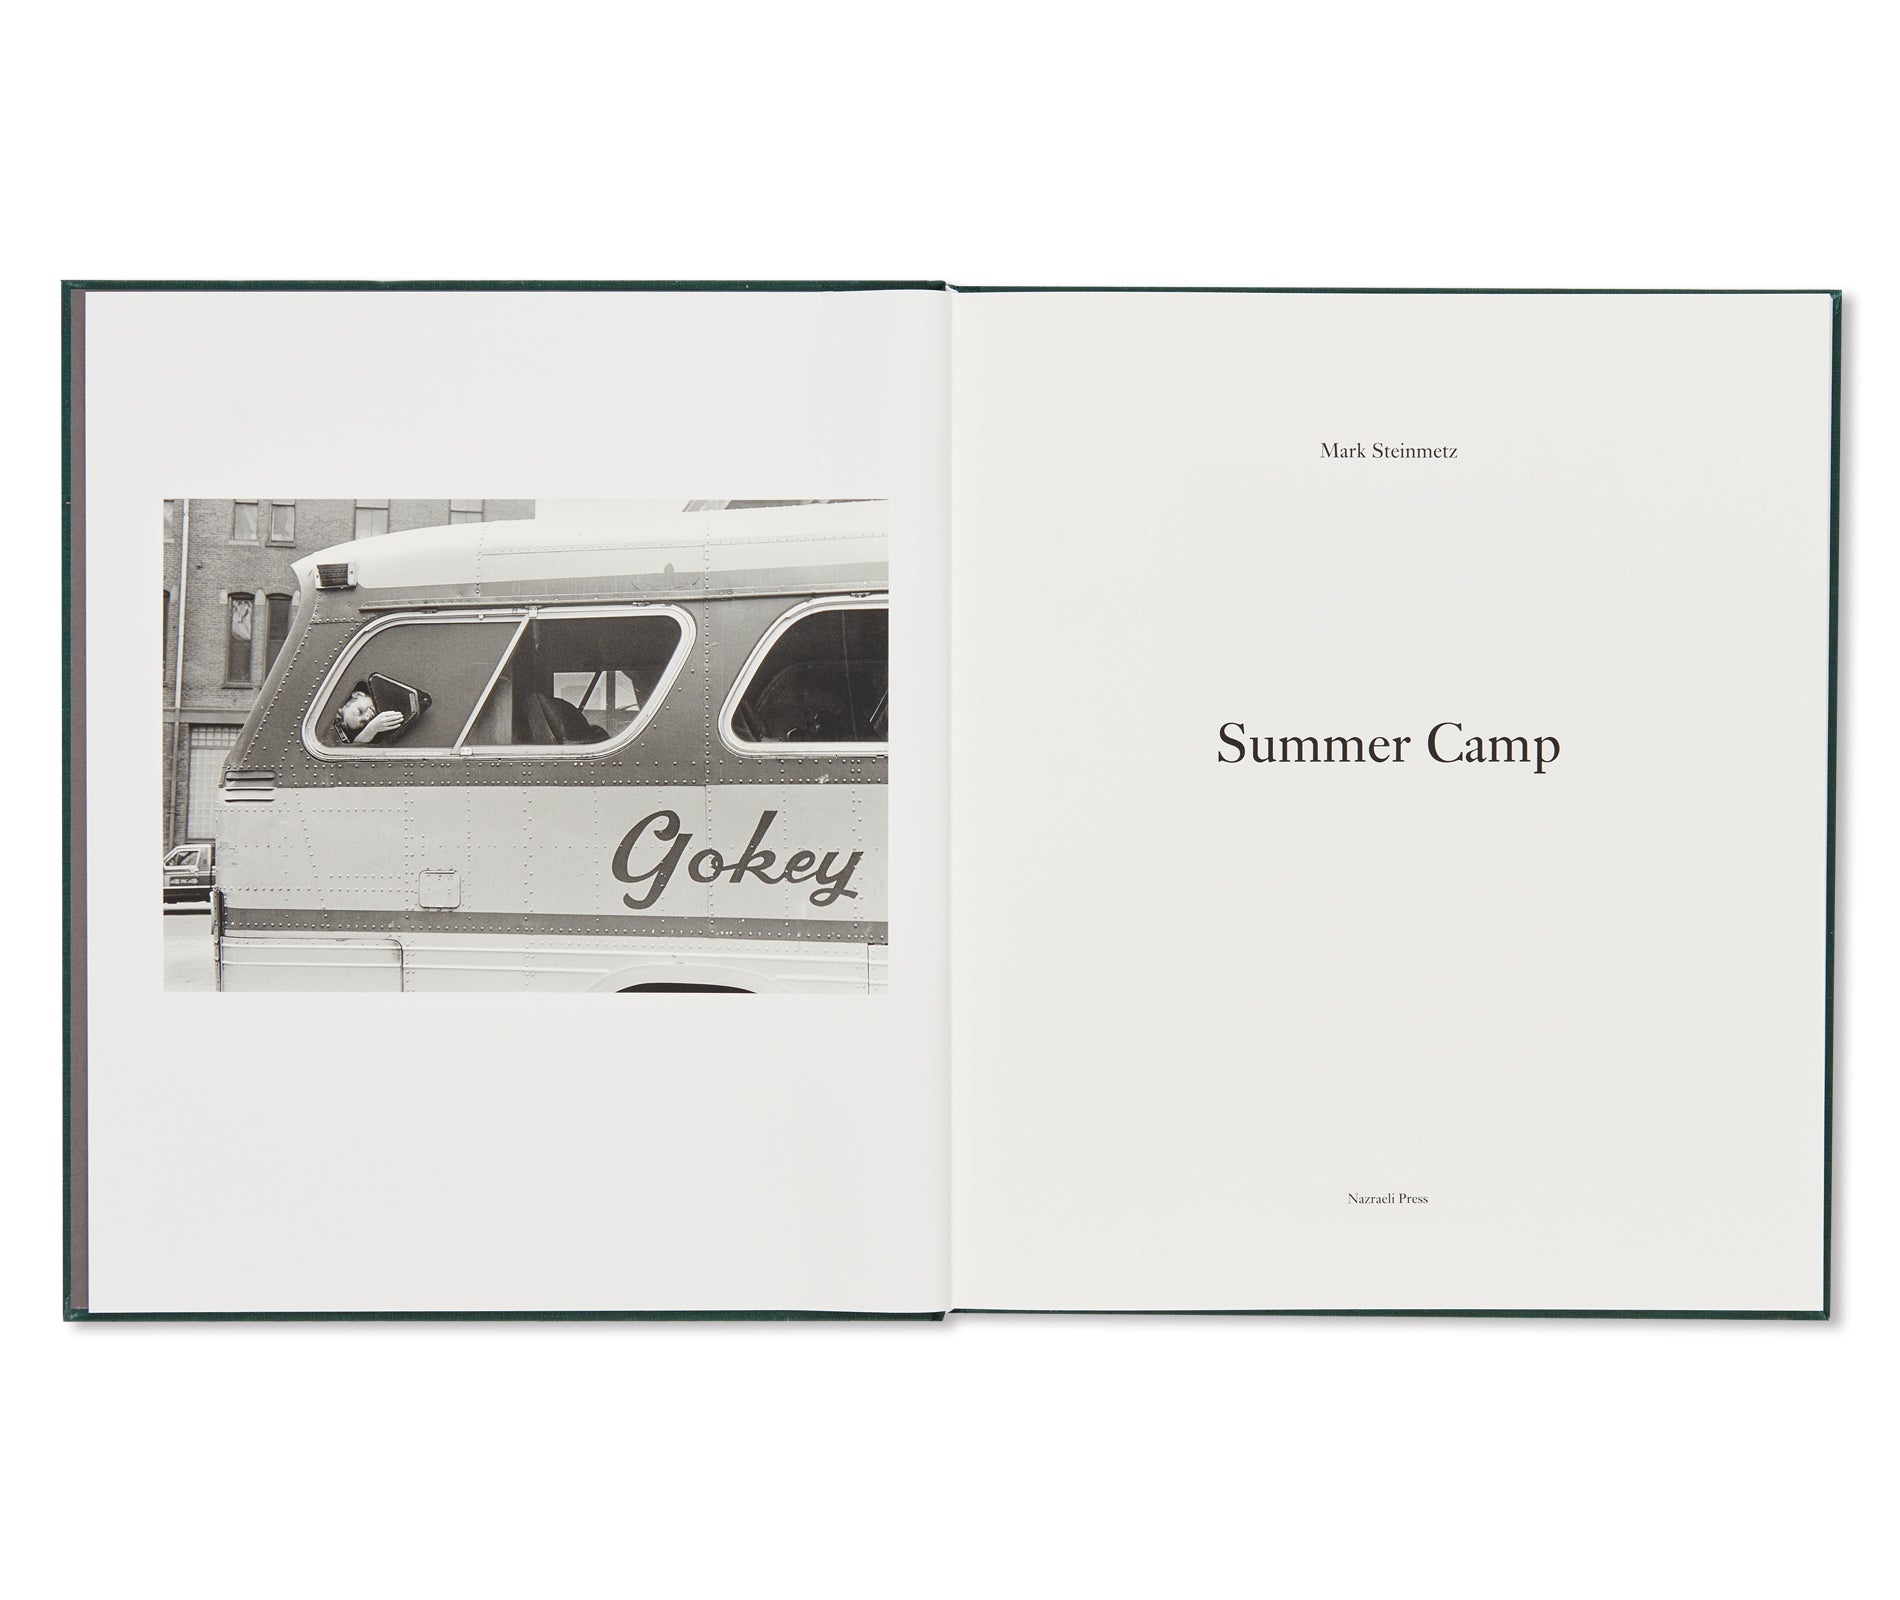 SUMMER CAMP by Mark Steinmetz [SPECIAL EDITION]